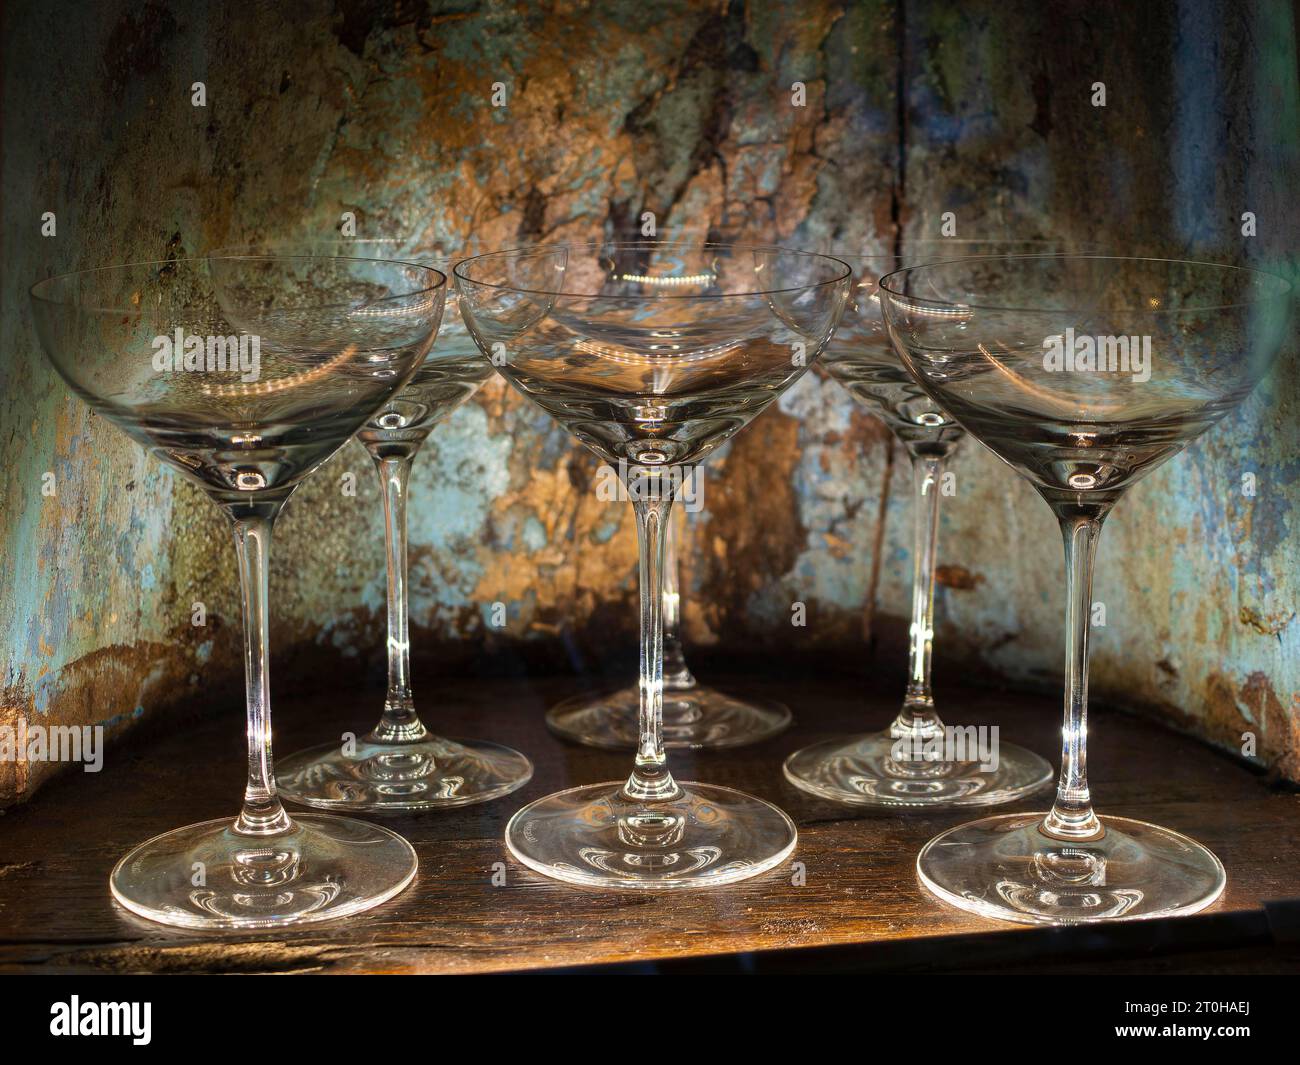 https://c8.alamy.com/comp/2T0HAEJ/lead-crystal-glasses-wine-glasses-champagne-glasses-colourful-in-old-display-case-2T0HAEJ.jpg